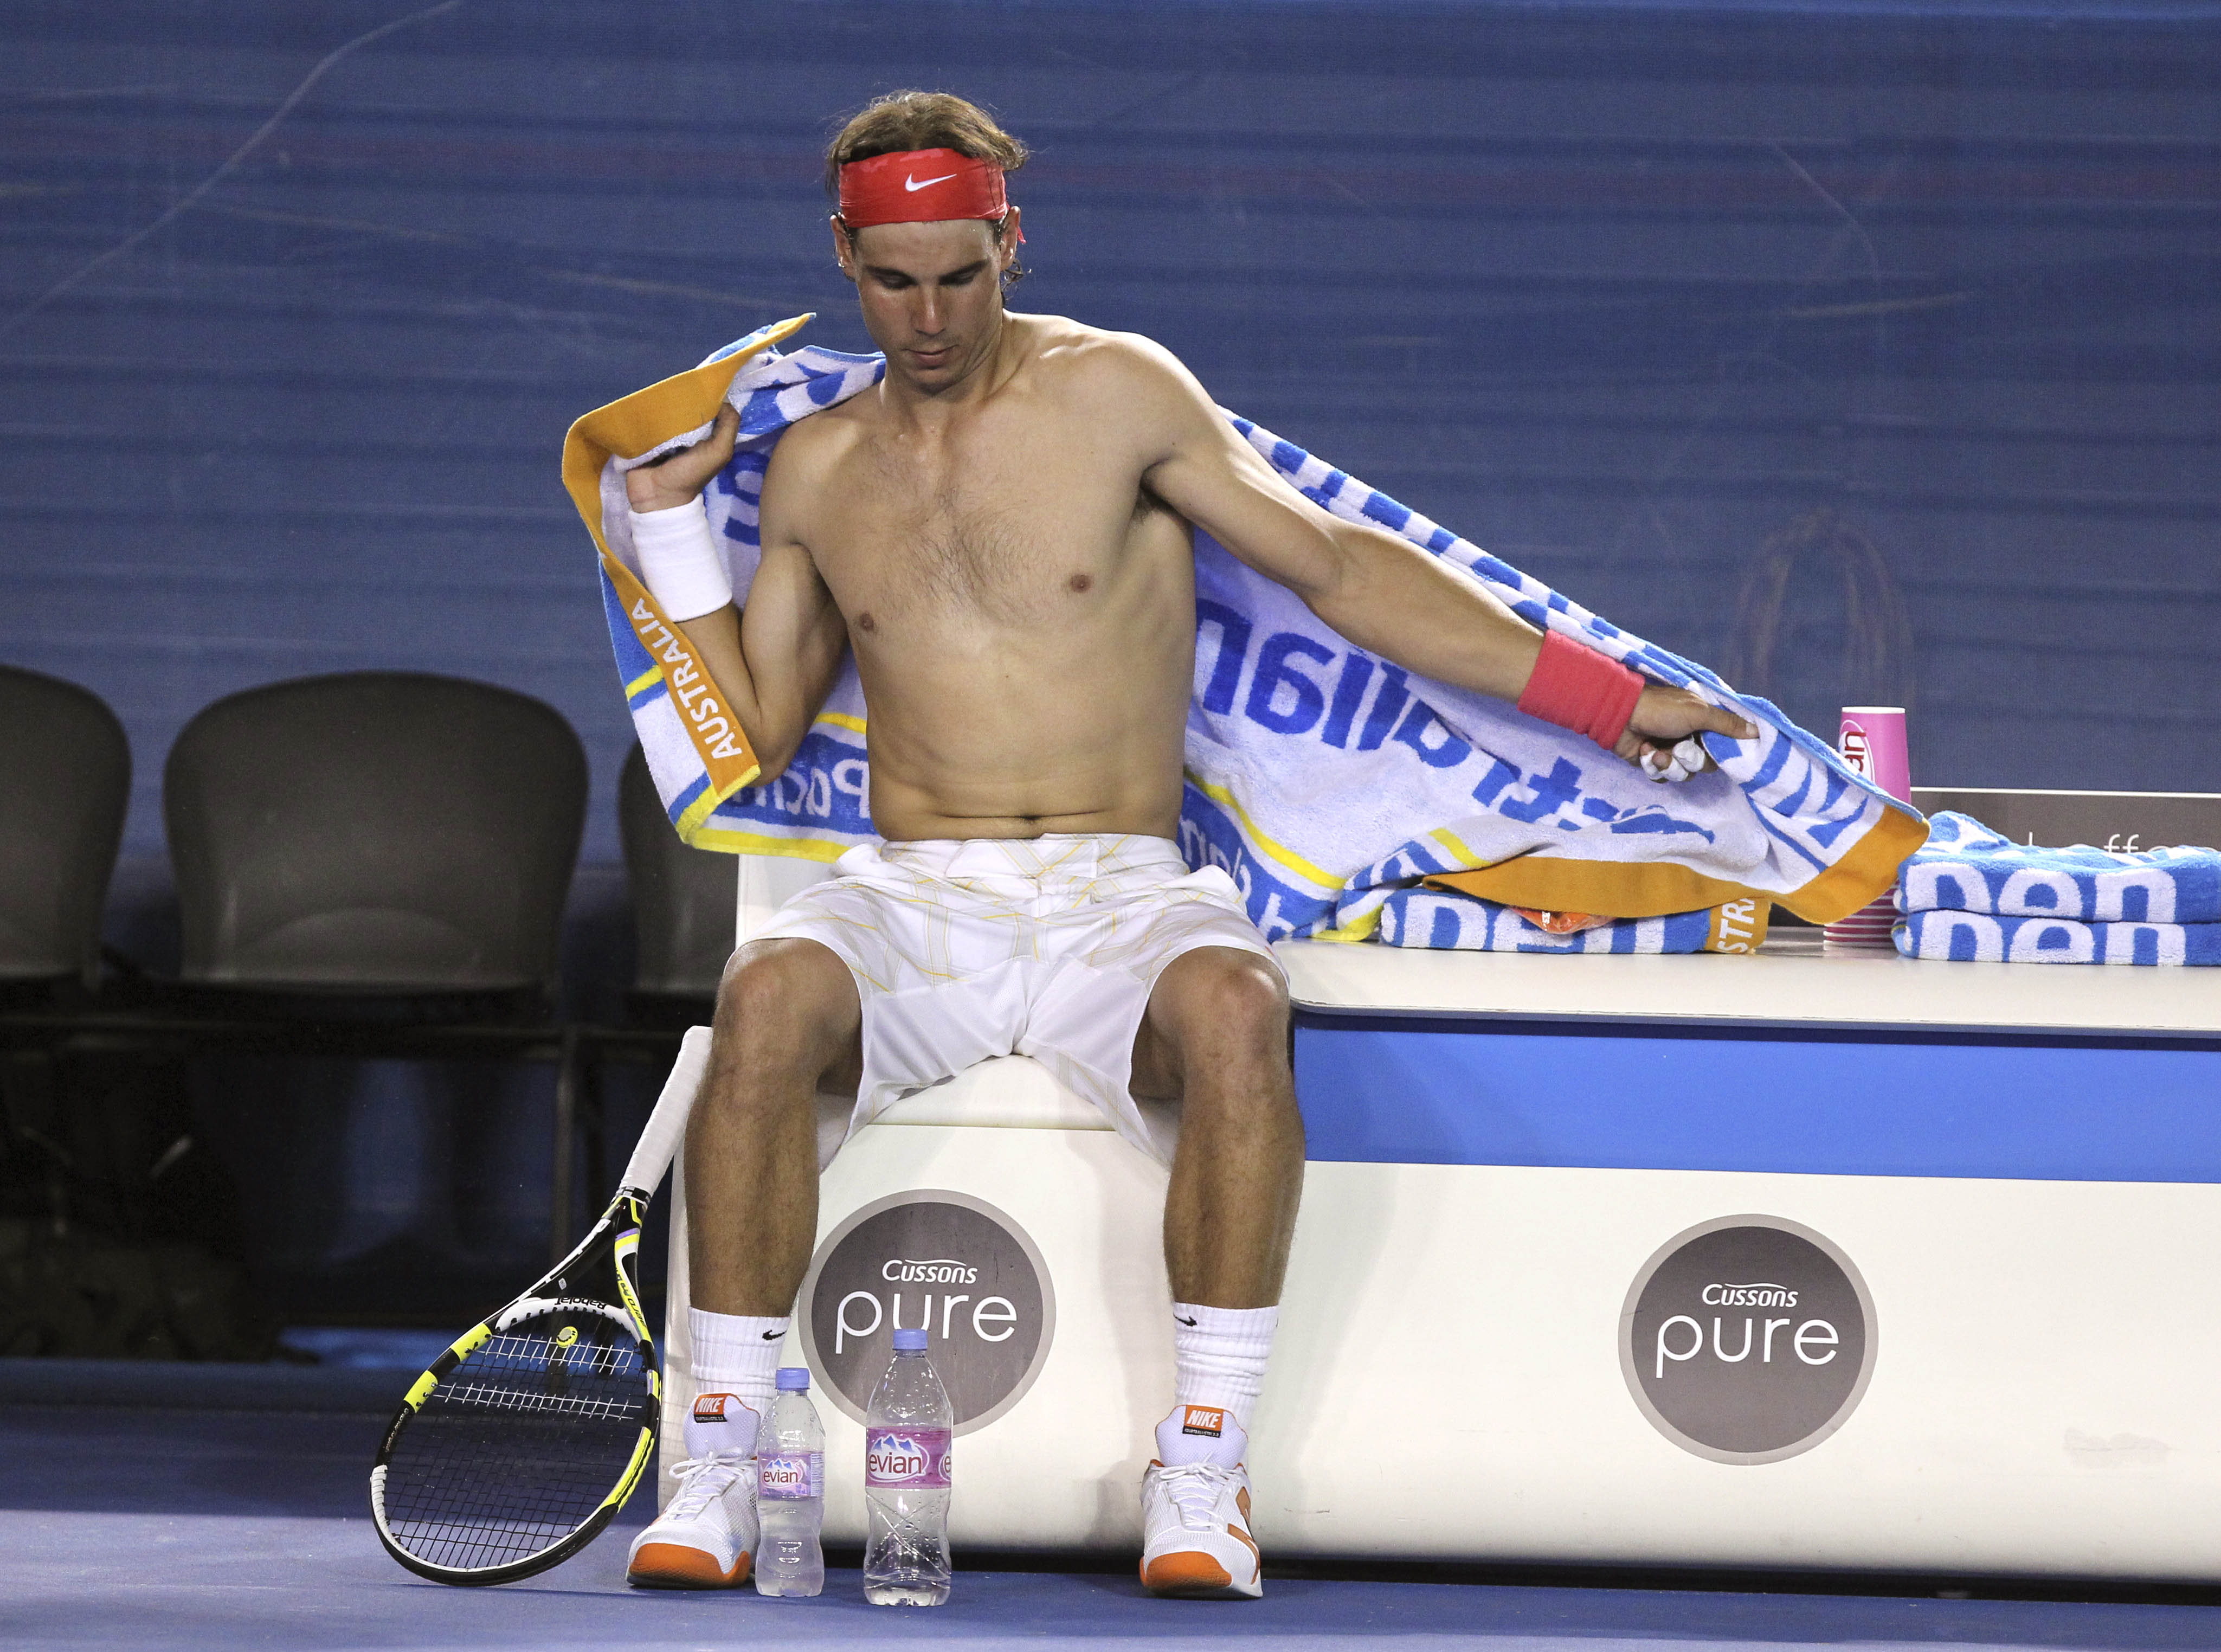 Tennis, Roger Federer, Andy Roddick, Australian Open, Juan Martin del Potro, Andy Murray, Kim Clijsters, Rafael Nadal